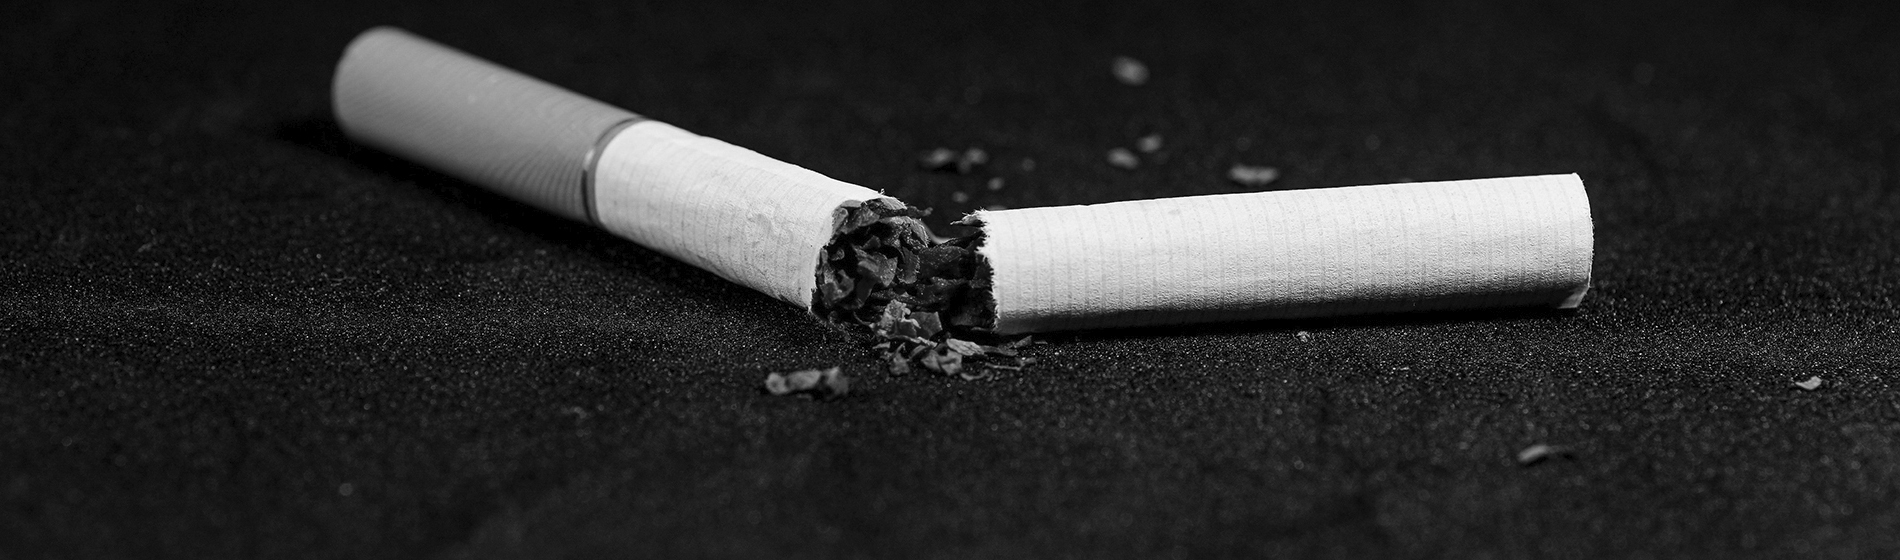 Patch anti tabac remboursé